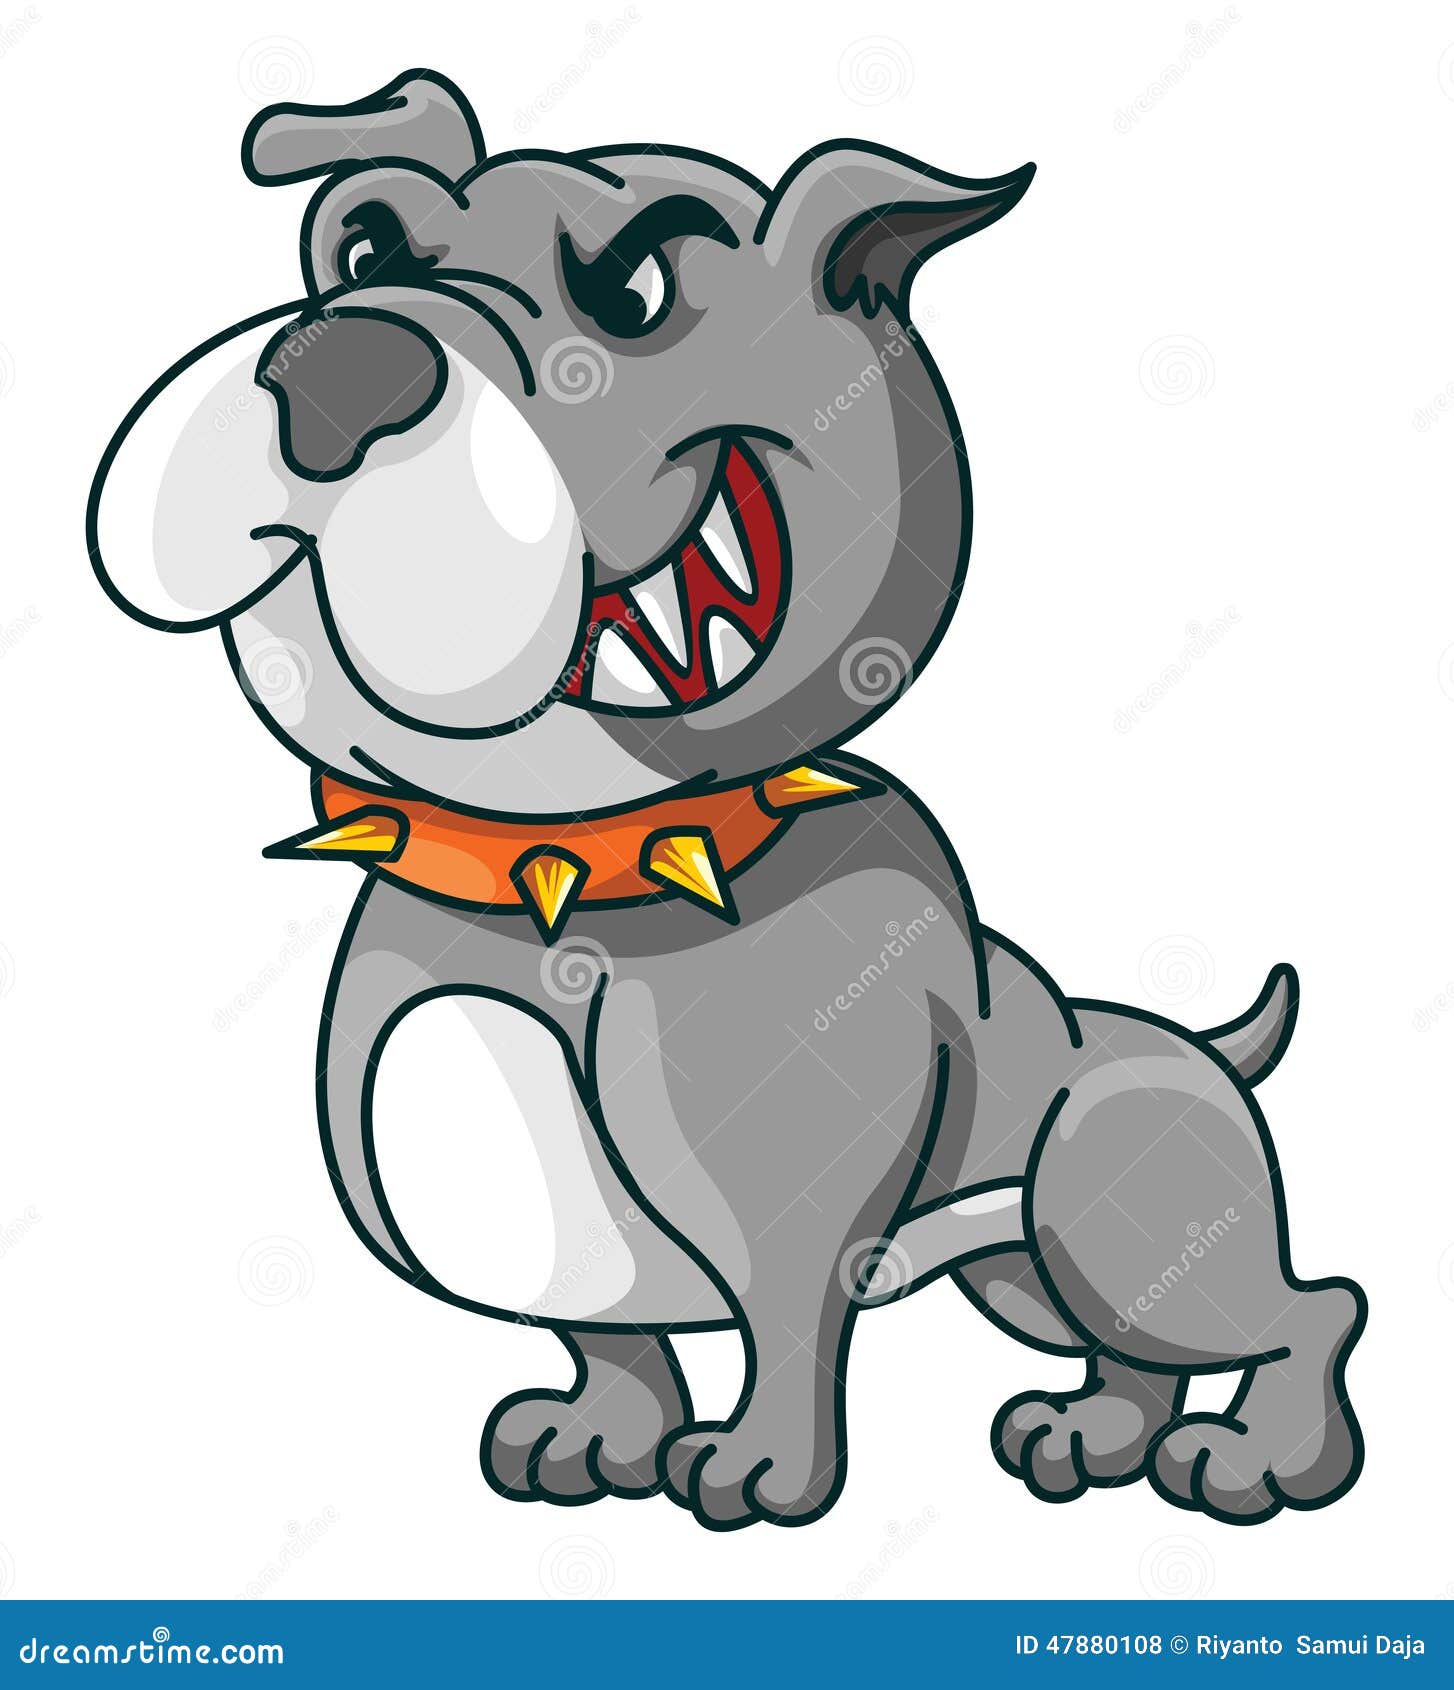 Bulldog stock vector. Illustration of spike, sport, school - 47880108